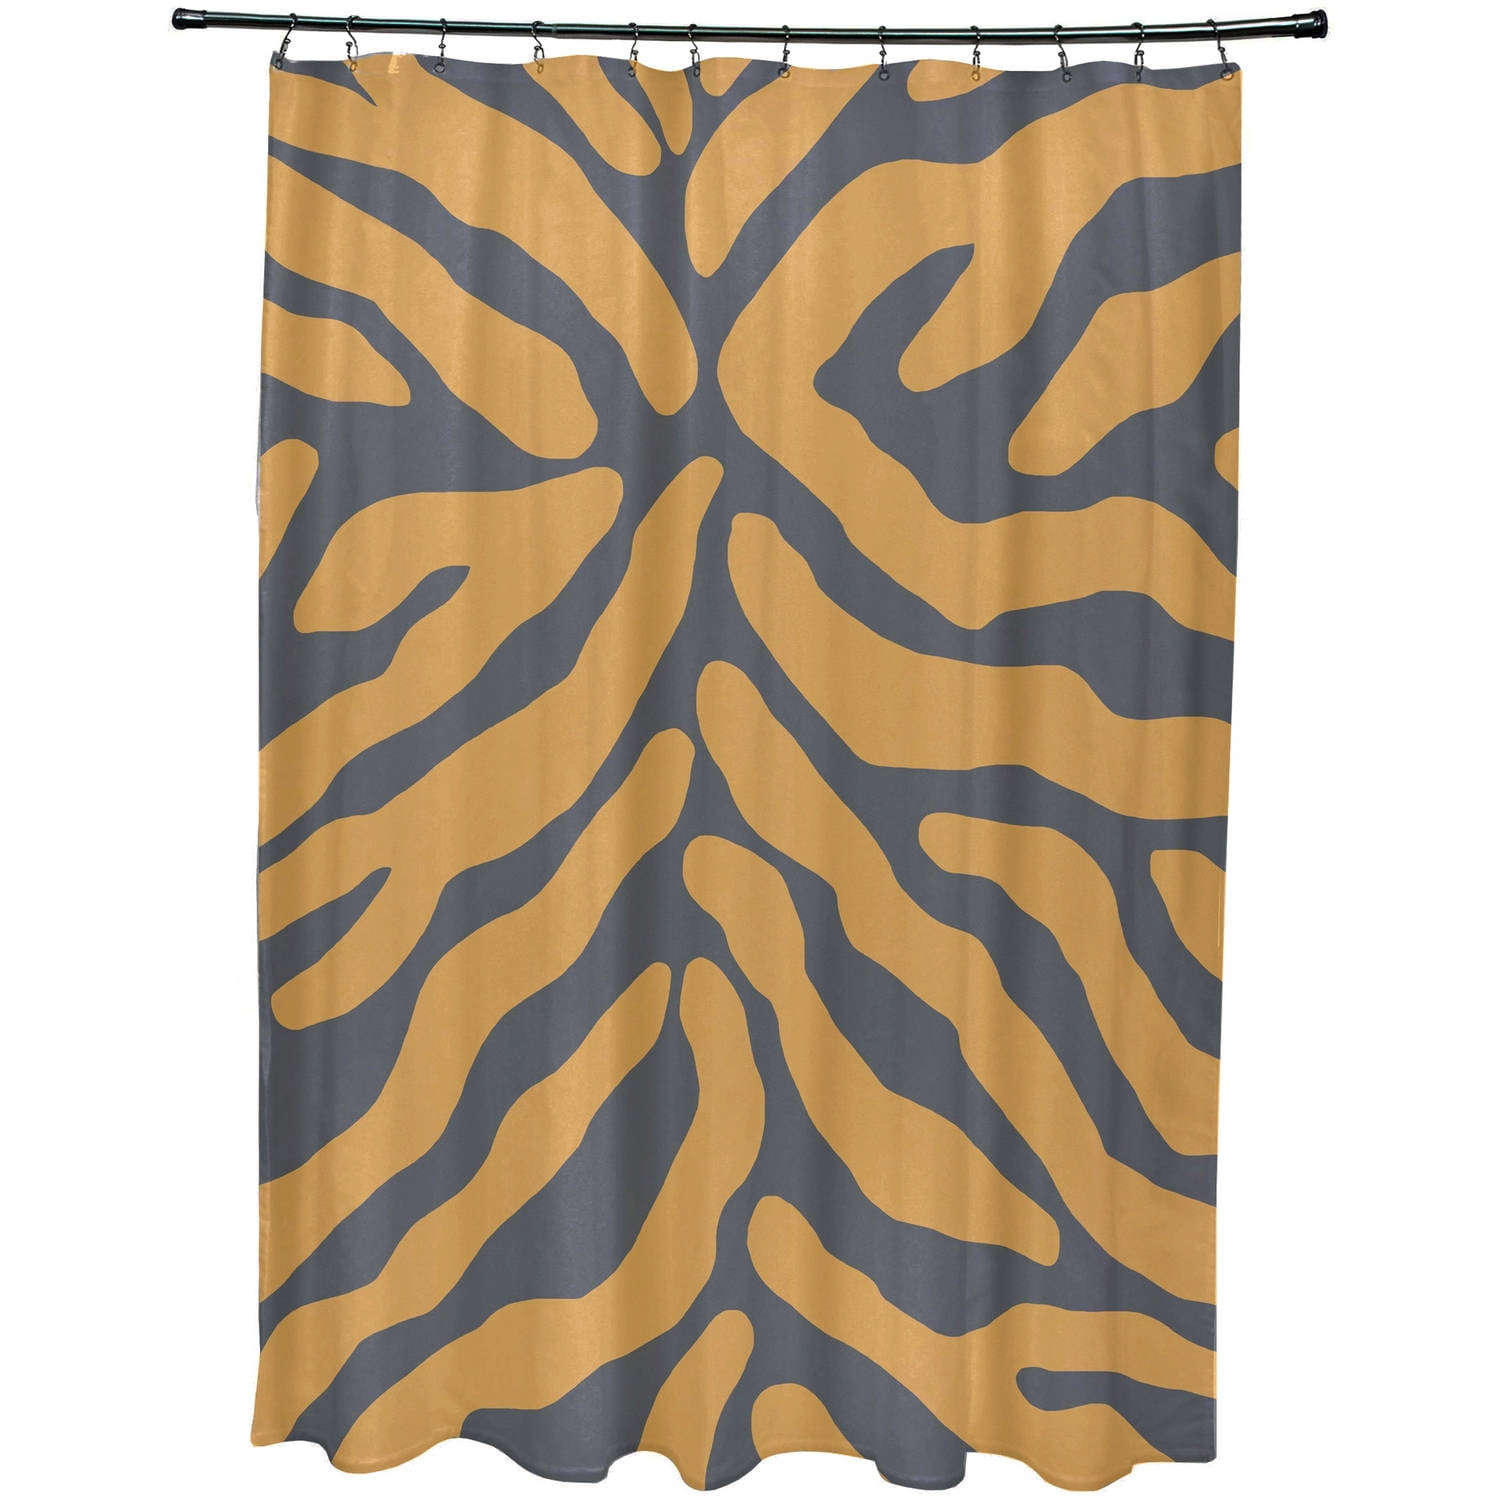 Red Animal Print Shower Curtain E by design SCAN452RE1 Birdwalk